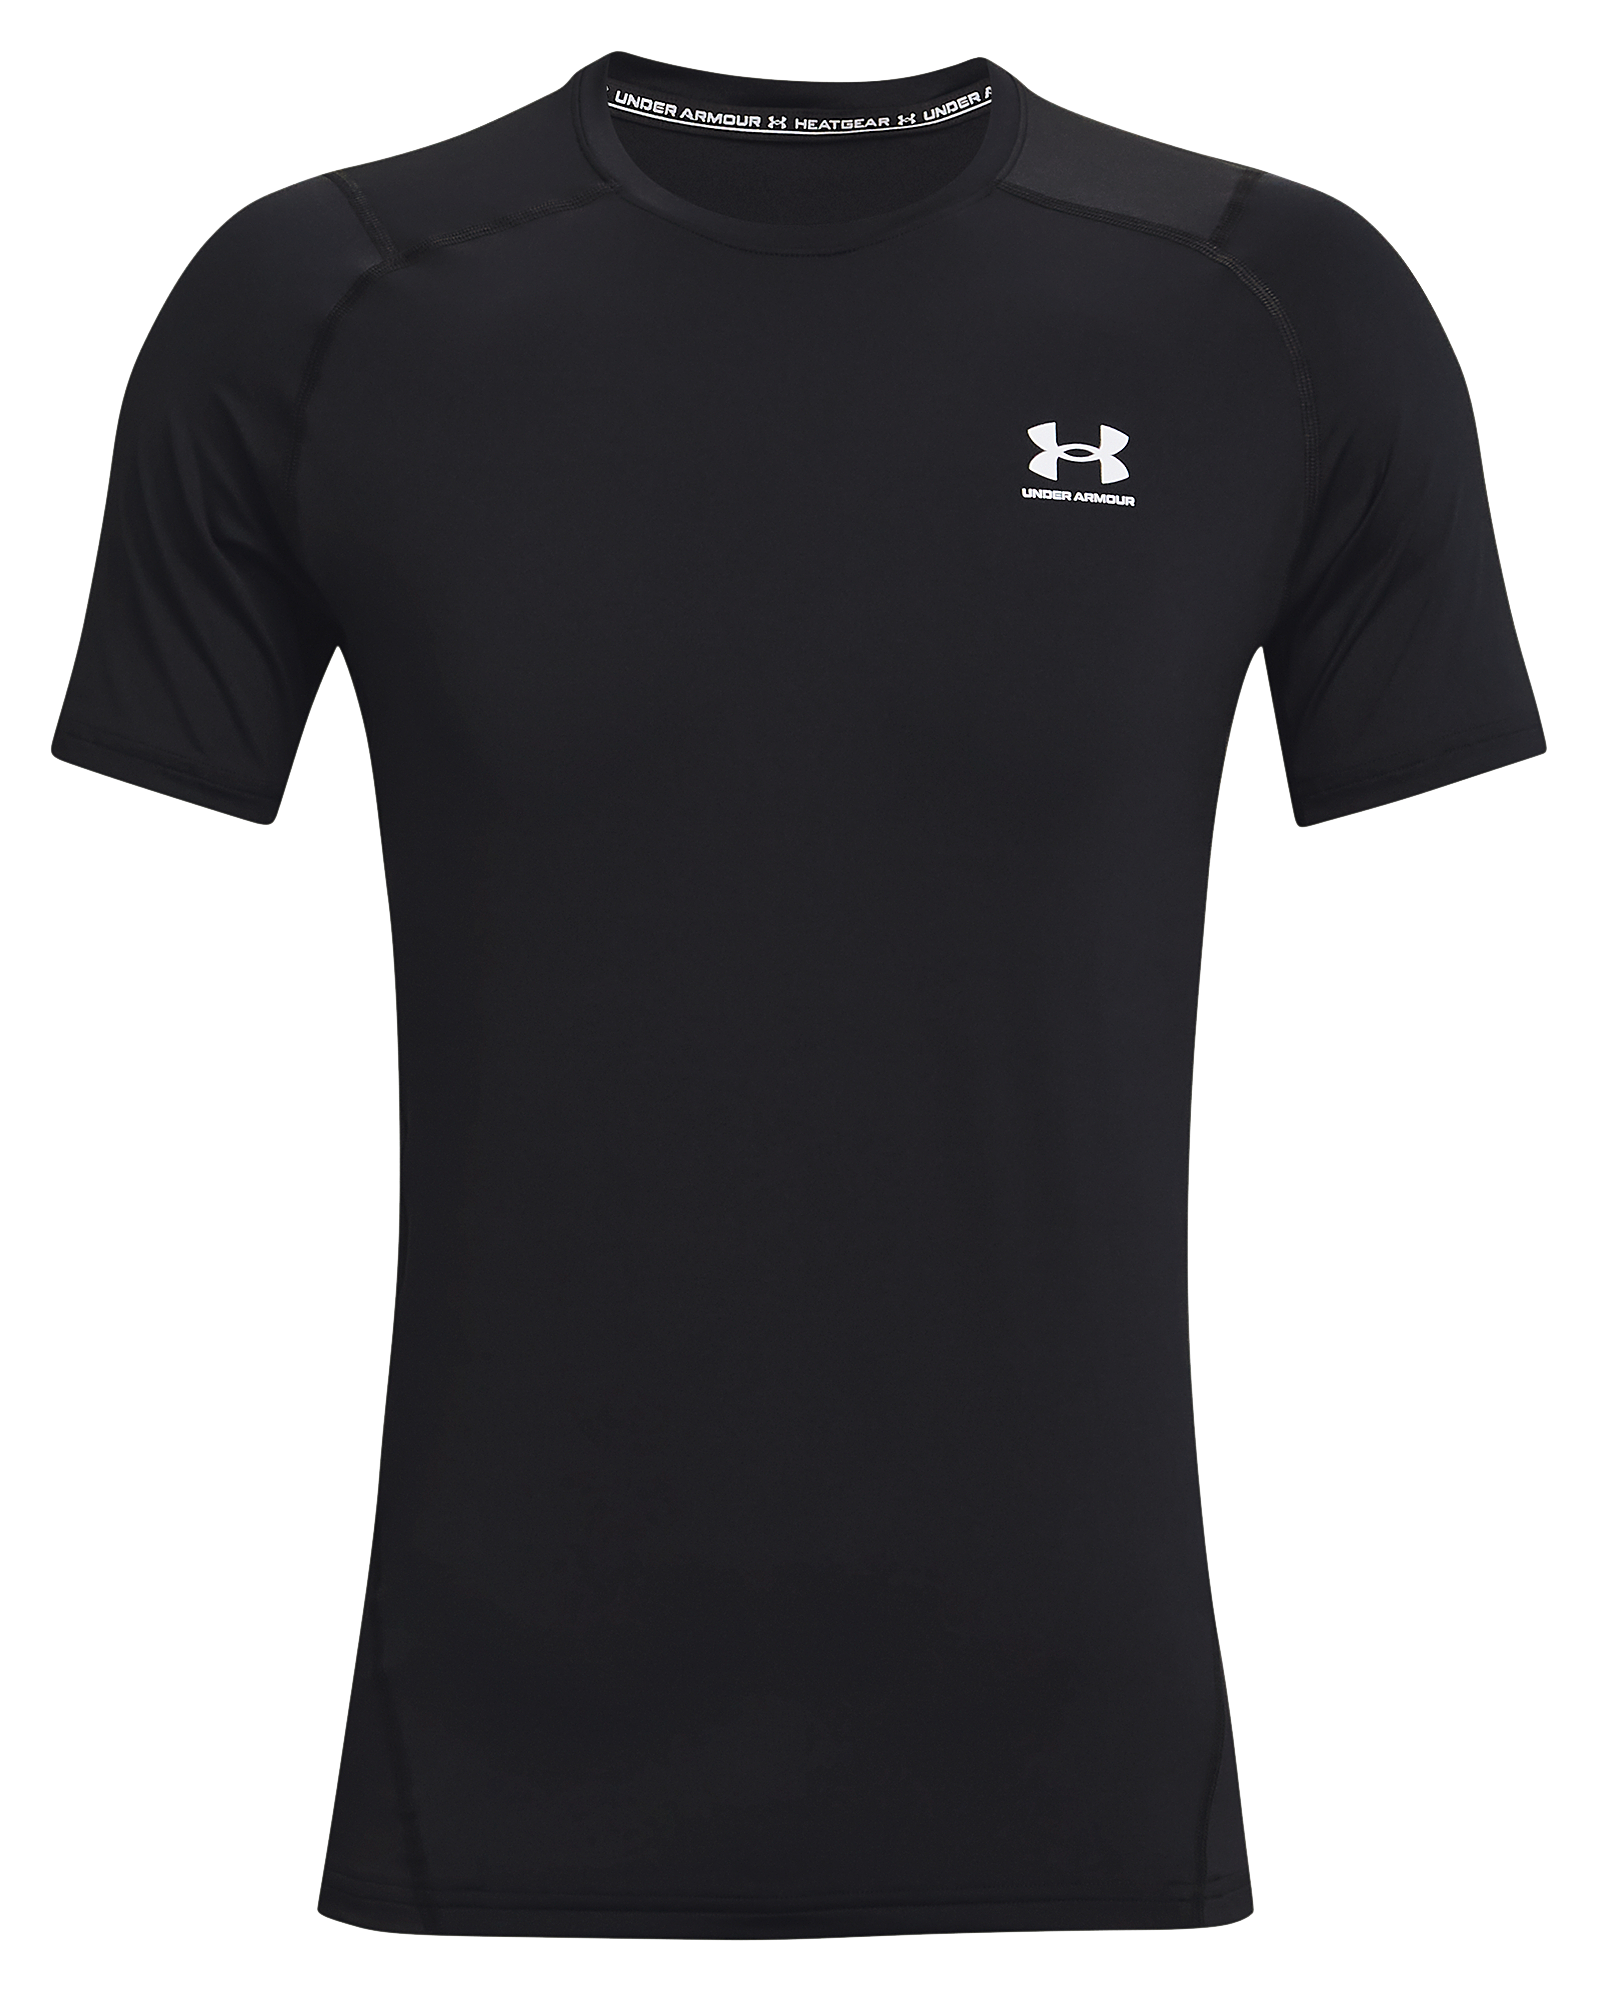 Under Armour HeatGear Fitted Short-Sleeve T-Shirt for Men - Black - 4XL